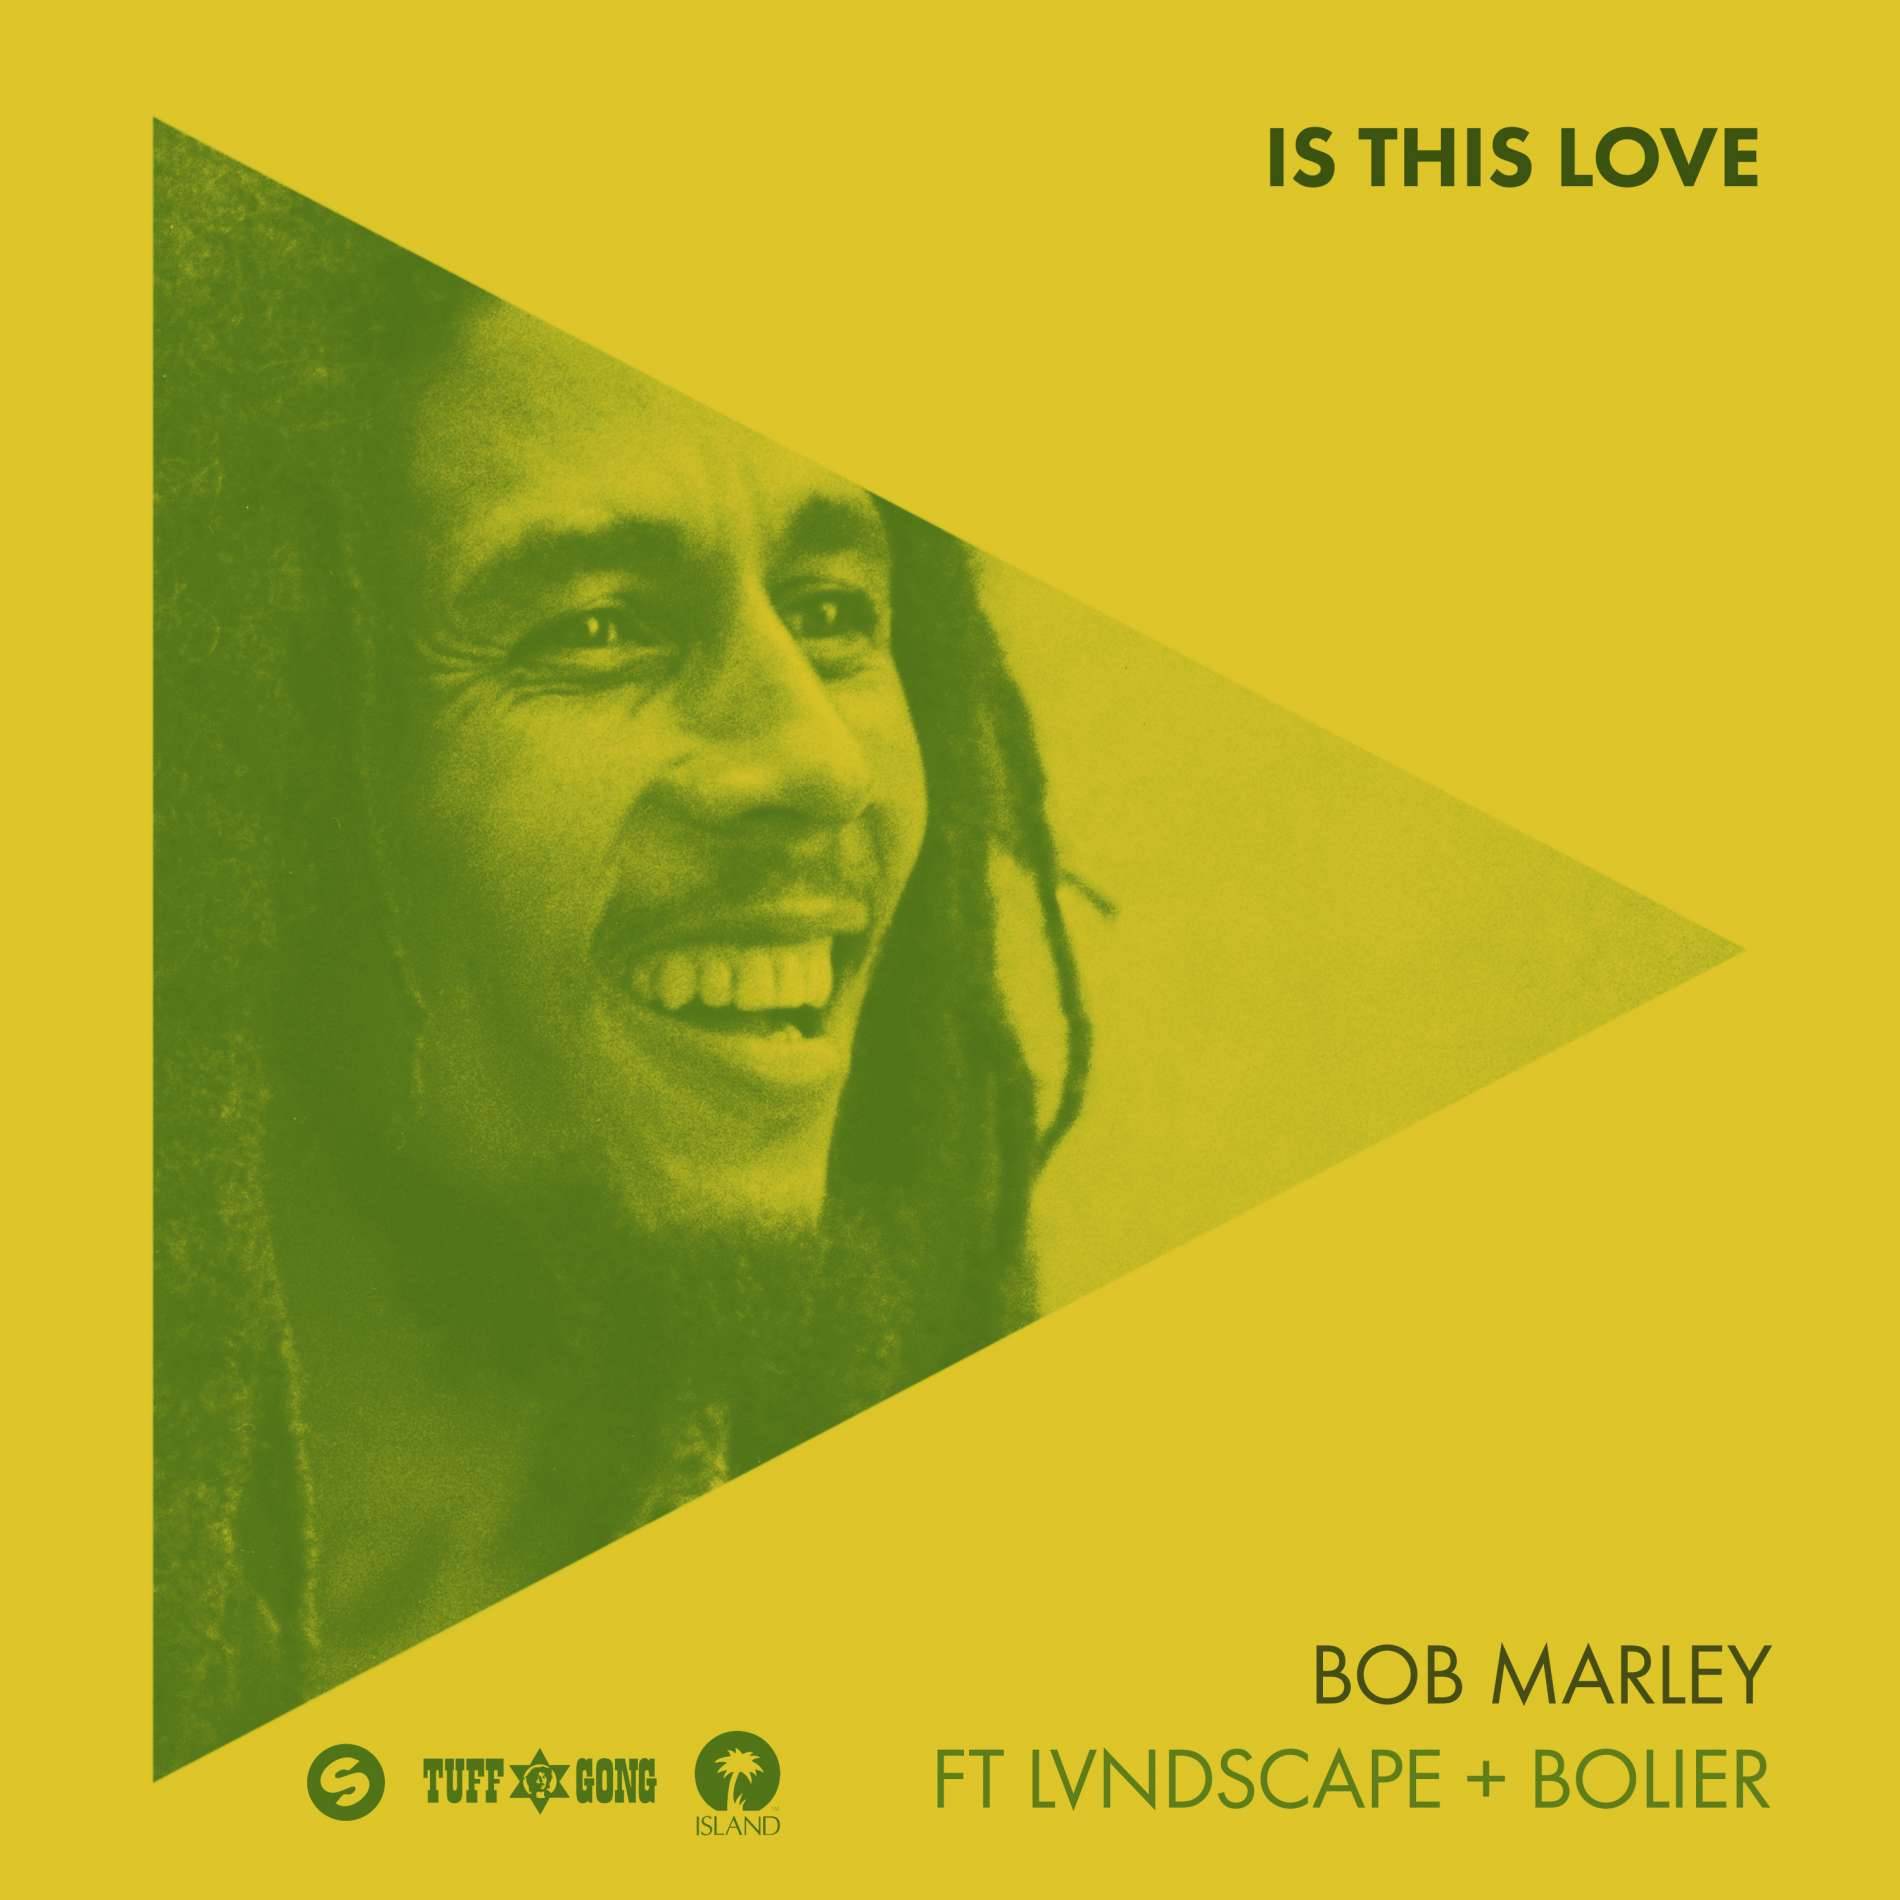 Bob Marley returns together with LVNDSCAPE & Bolier